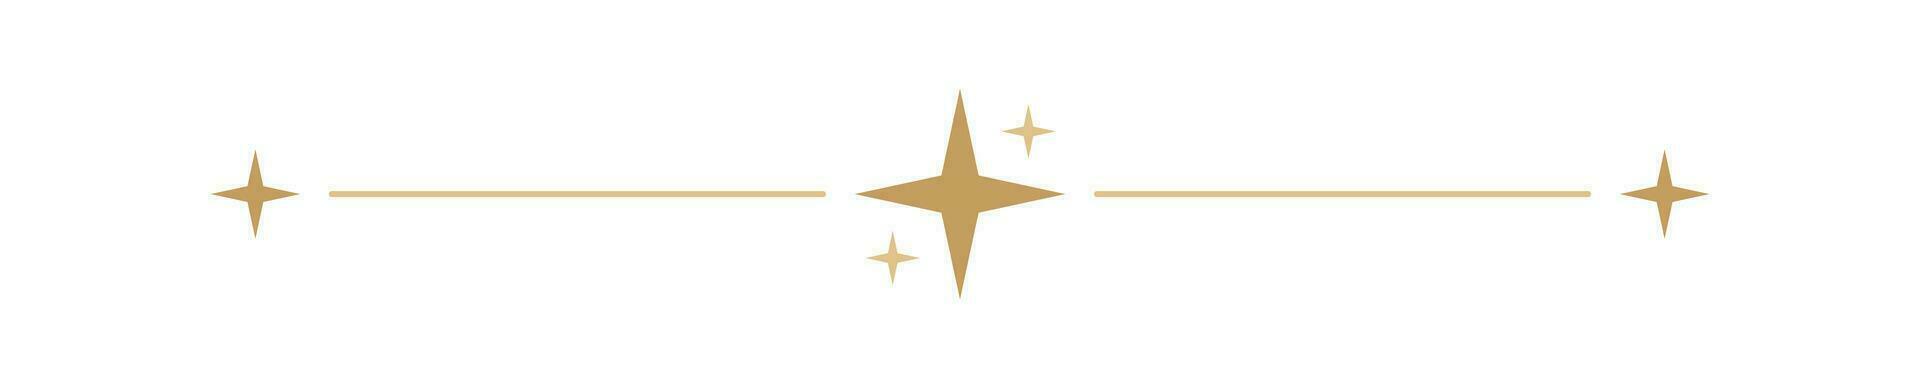 Divider with Aesthetic Star Christmas frame border horizontal line shape icon for decorative vintage doodle element, greeting card, invitation. design vector illustration